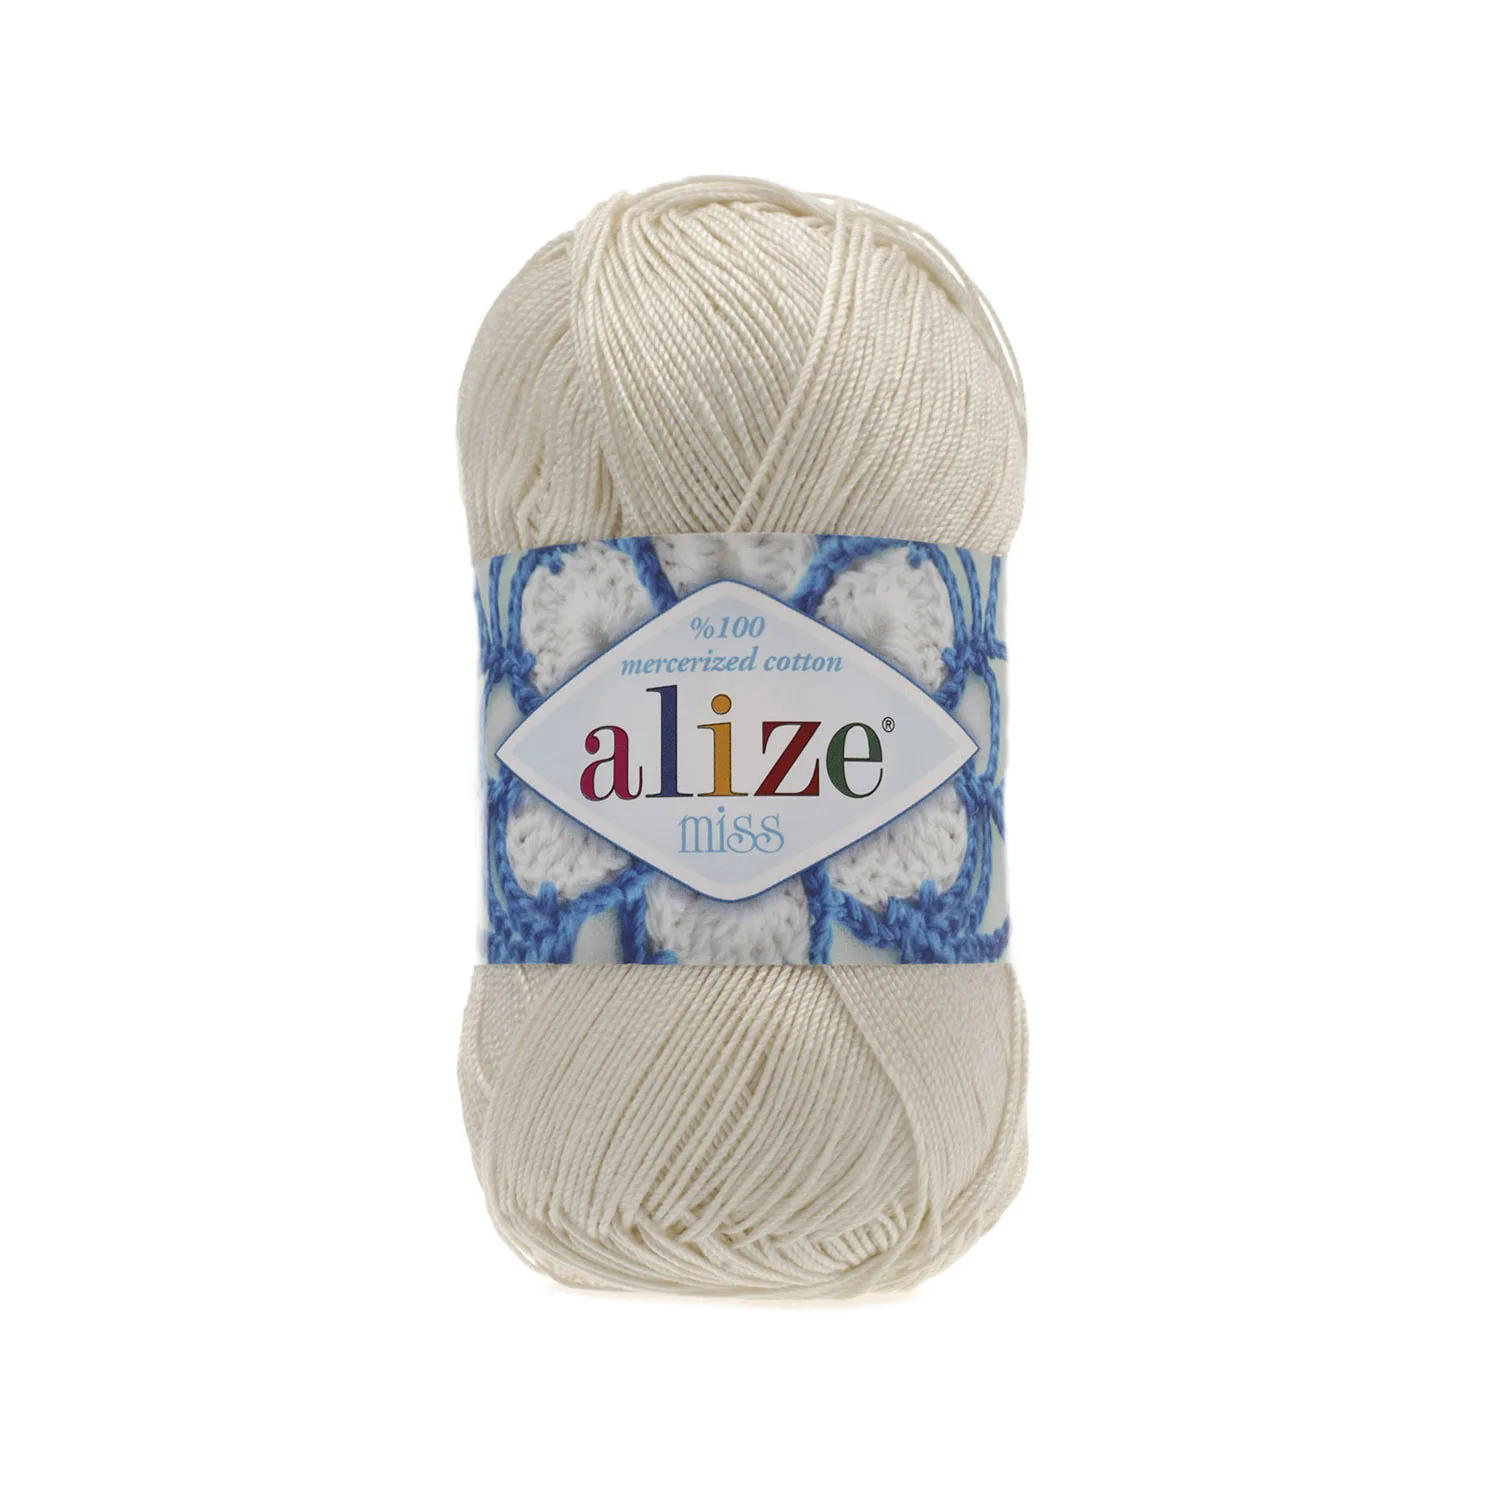 All Knitting Crochet Pattern Shawl, Home Textile,